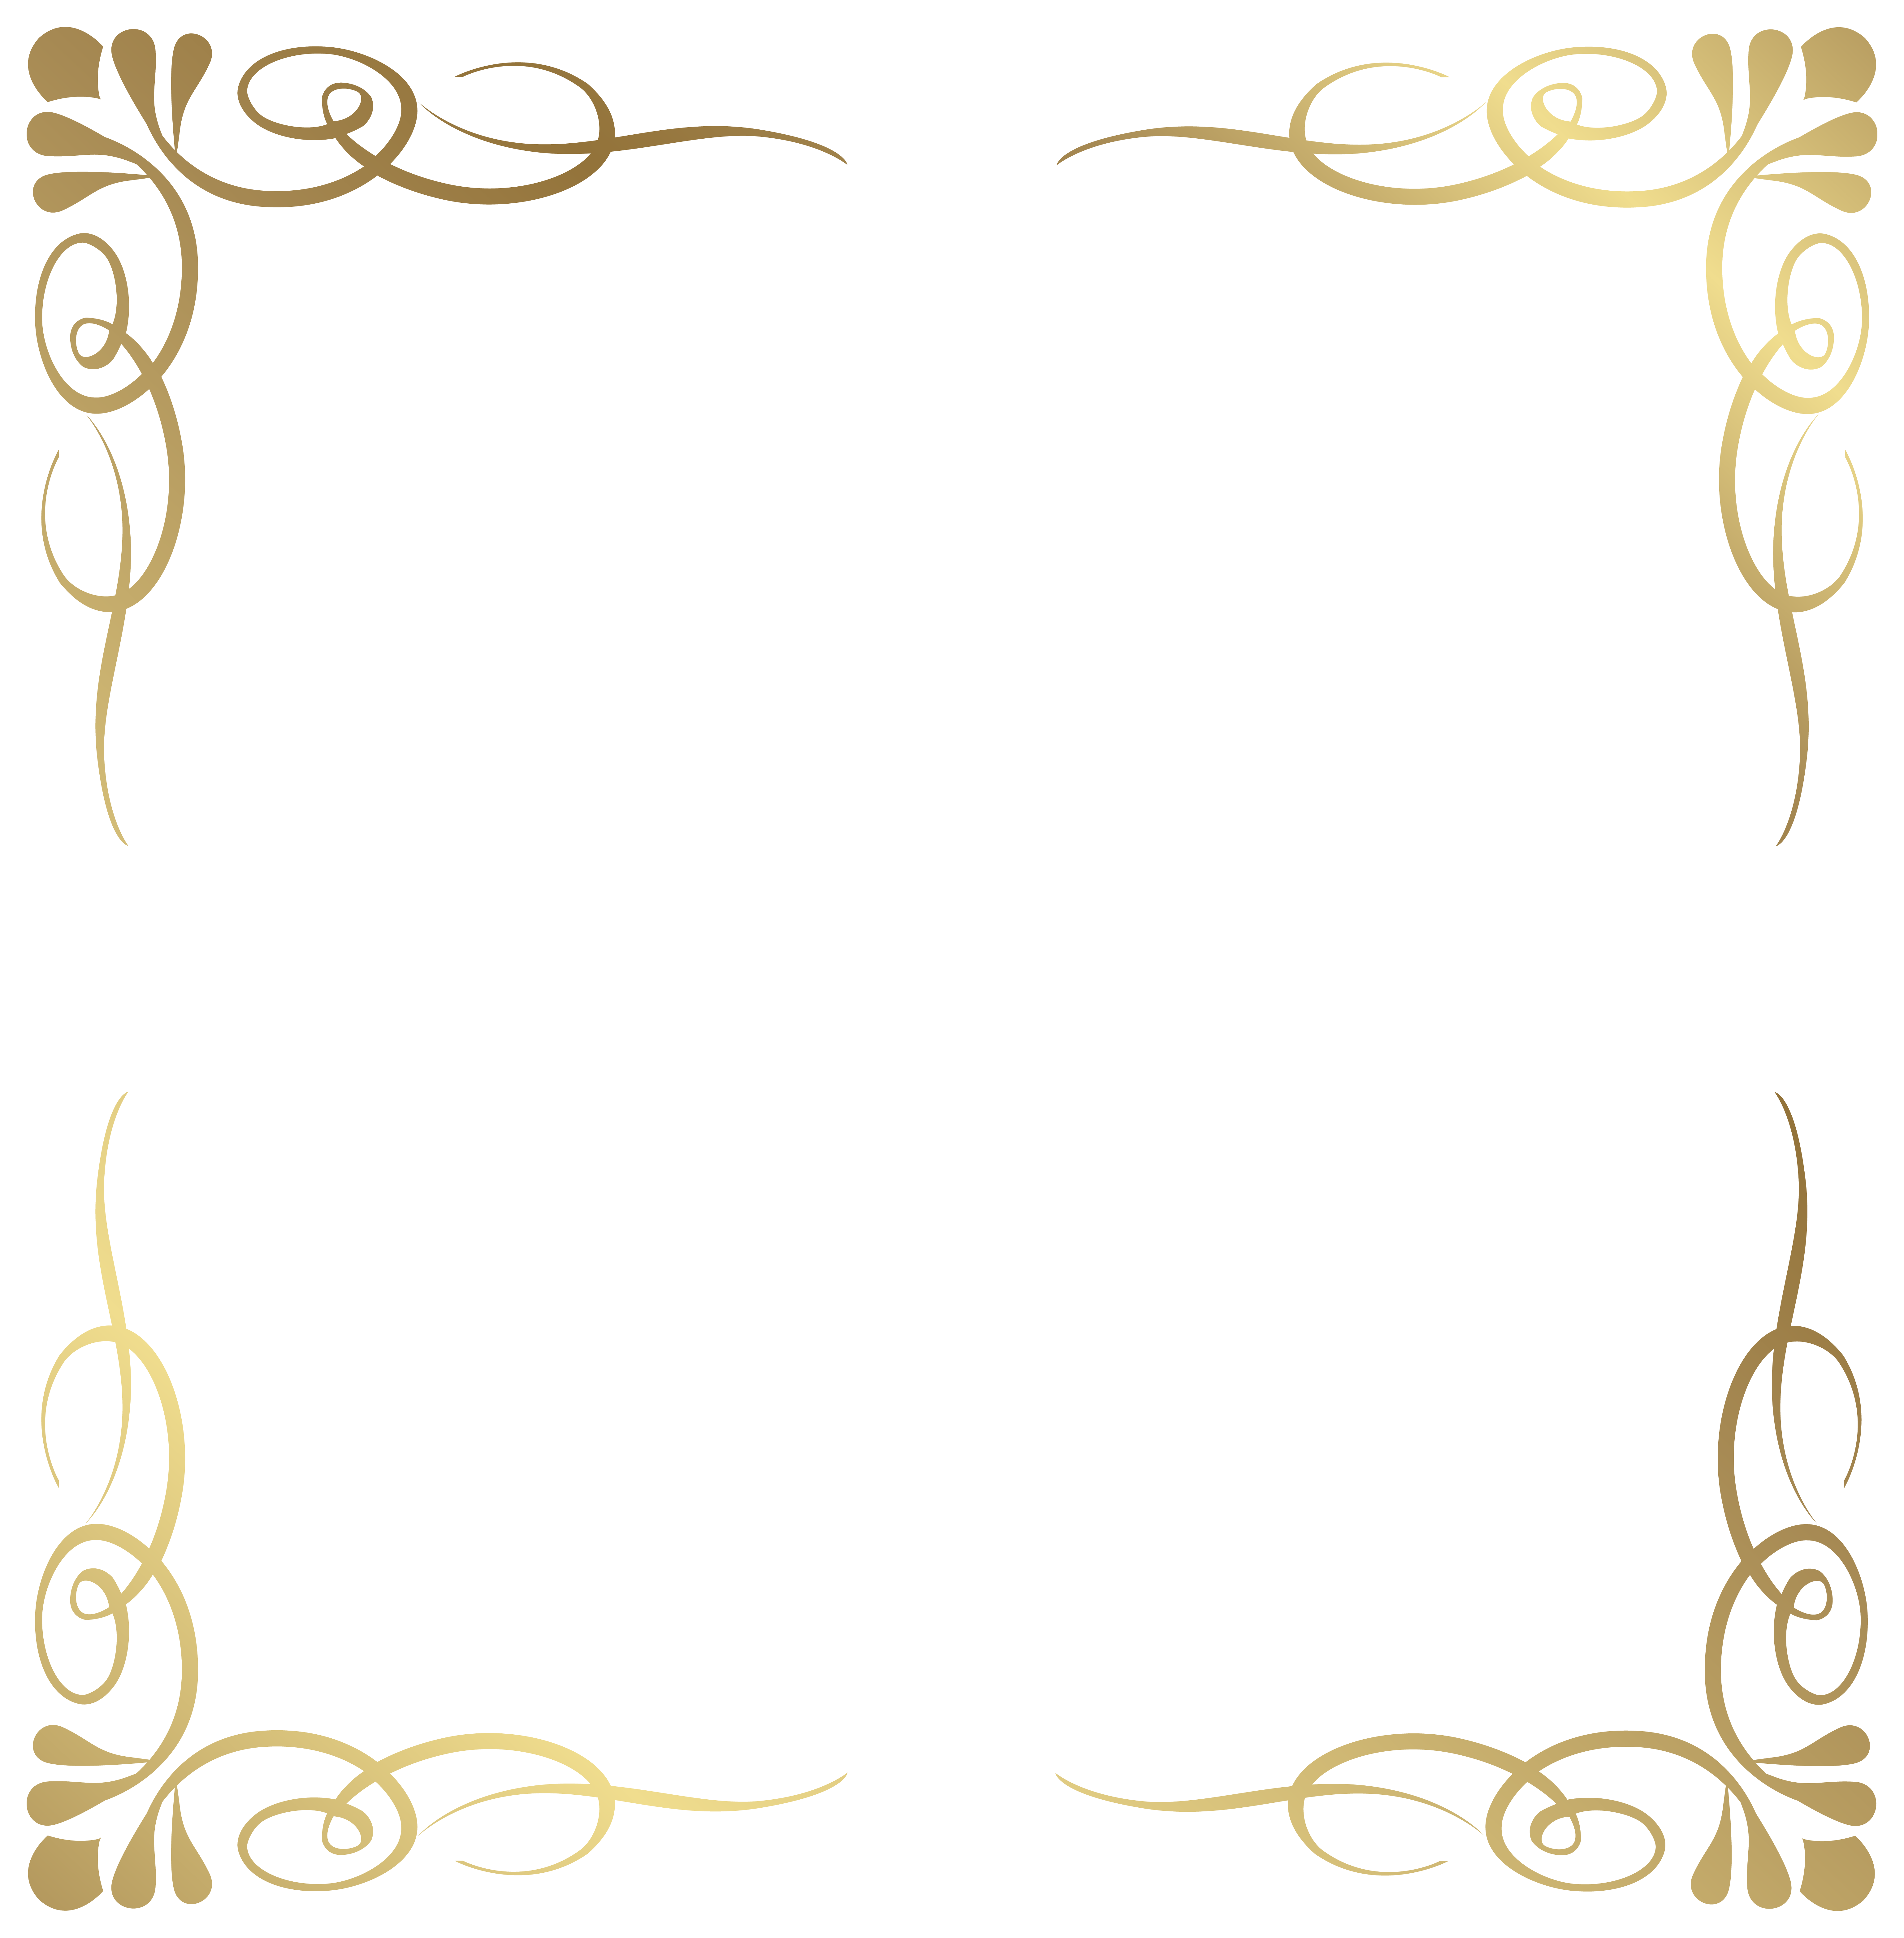 Transparent decorative frame border. Lace clipart gothic wedding